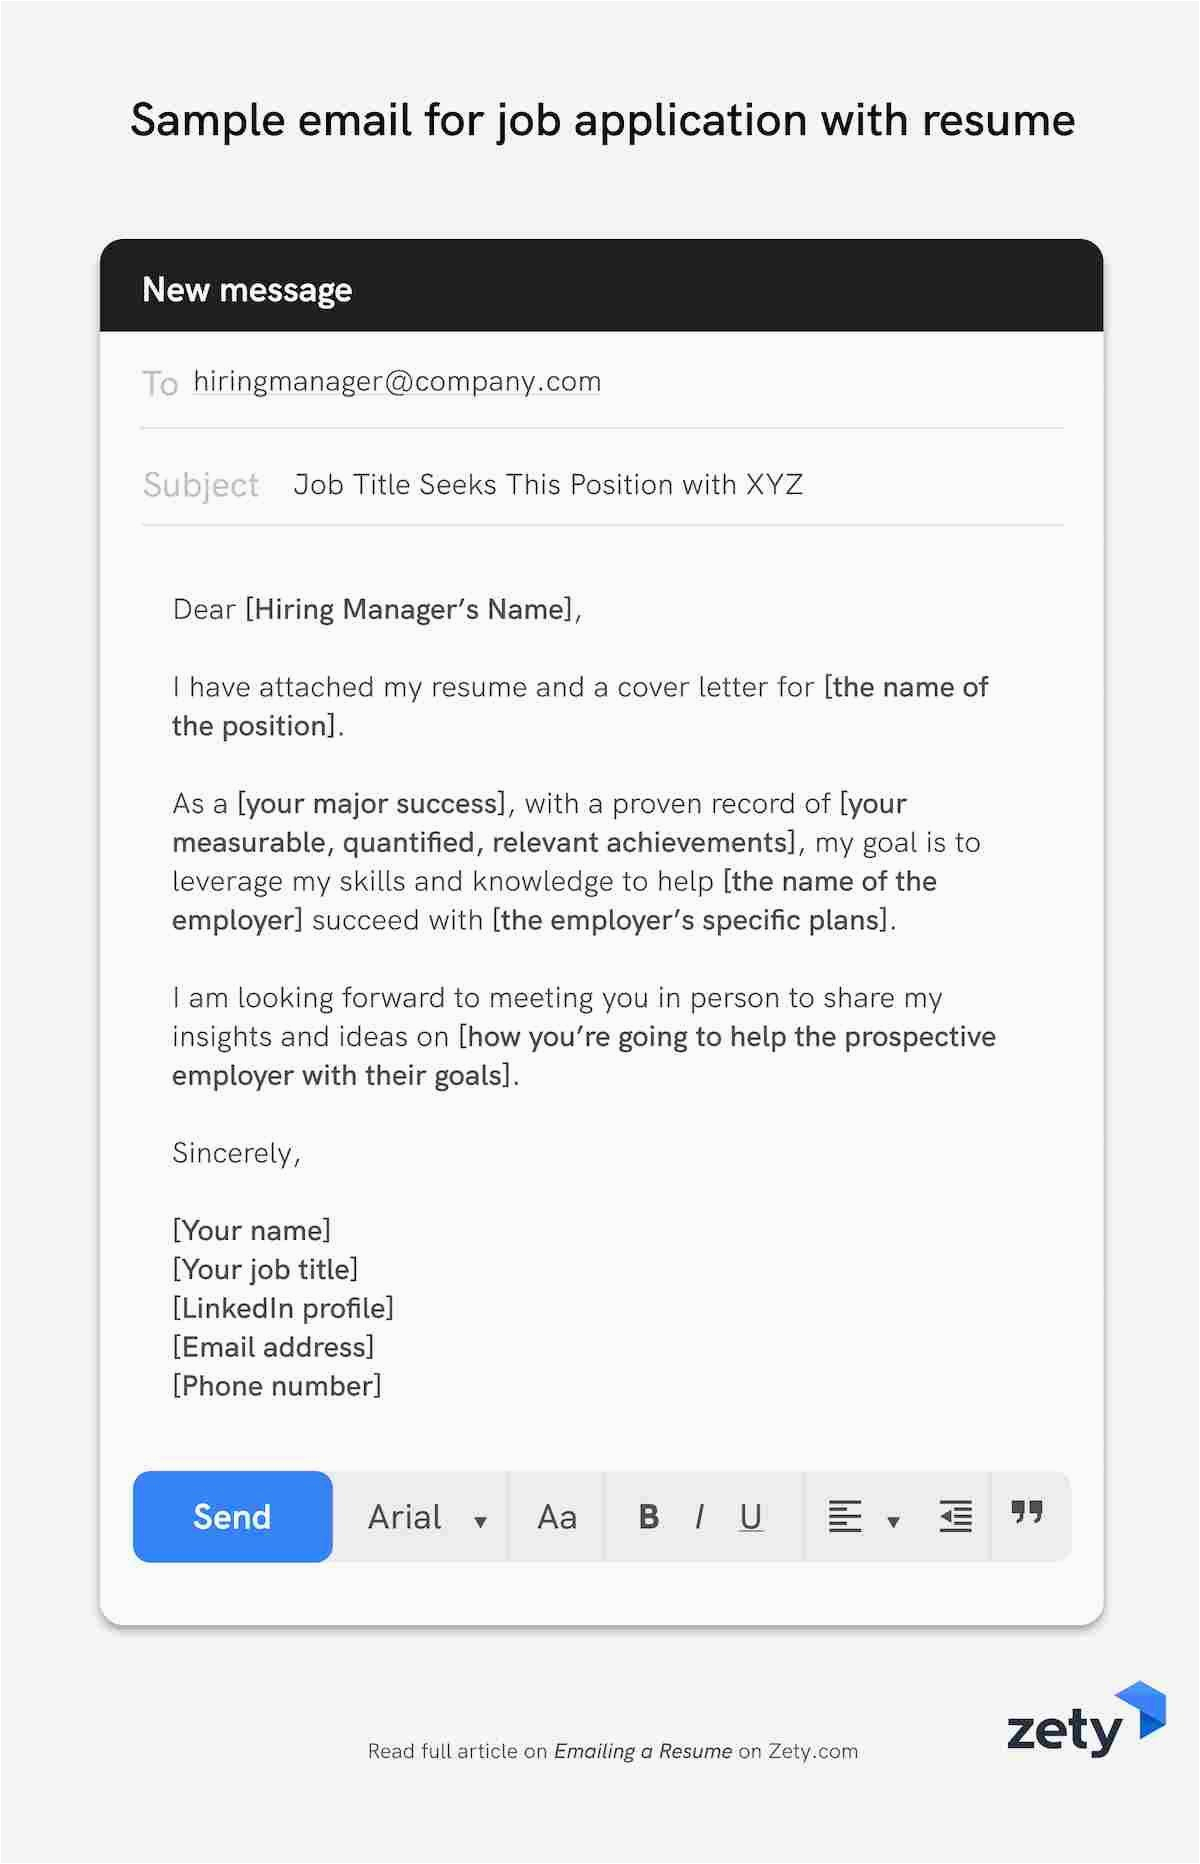 Sample Email Letter for Sending Resume Emailing A Resume 12 Job Application Email Samples